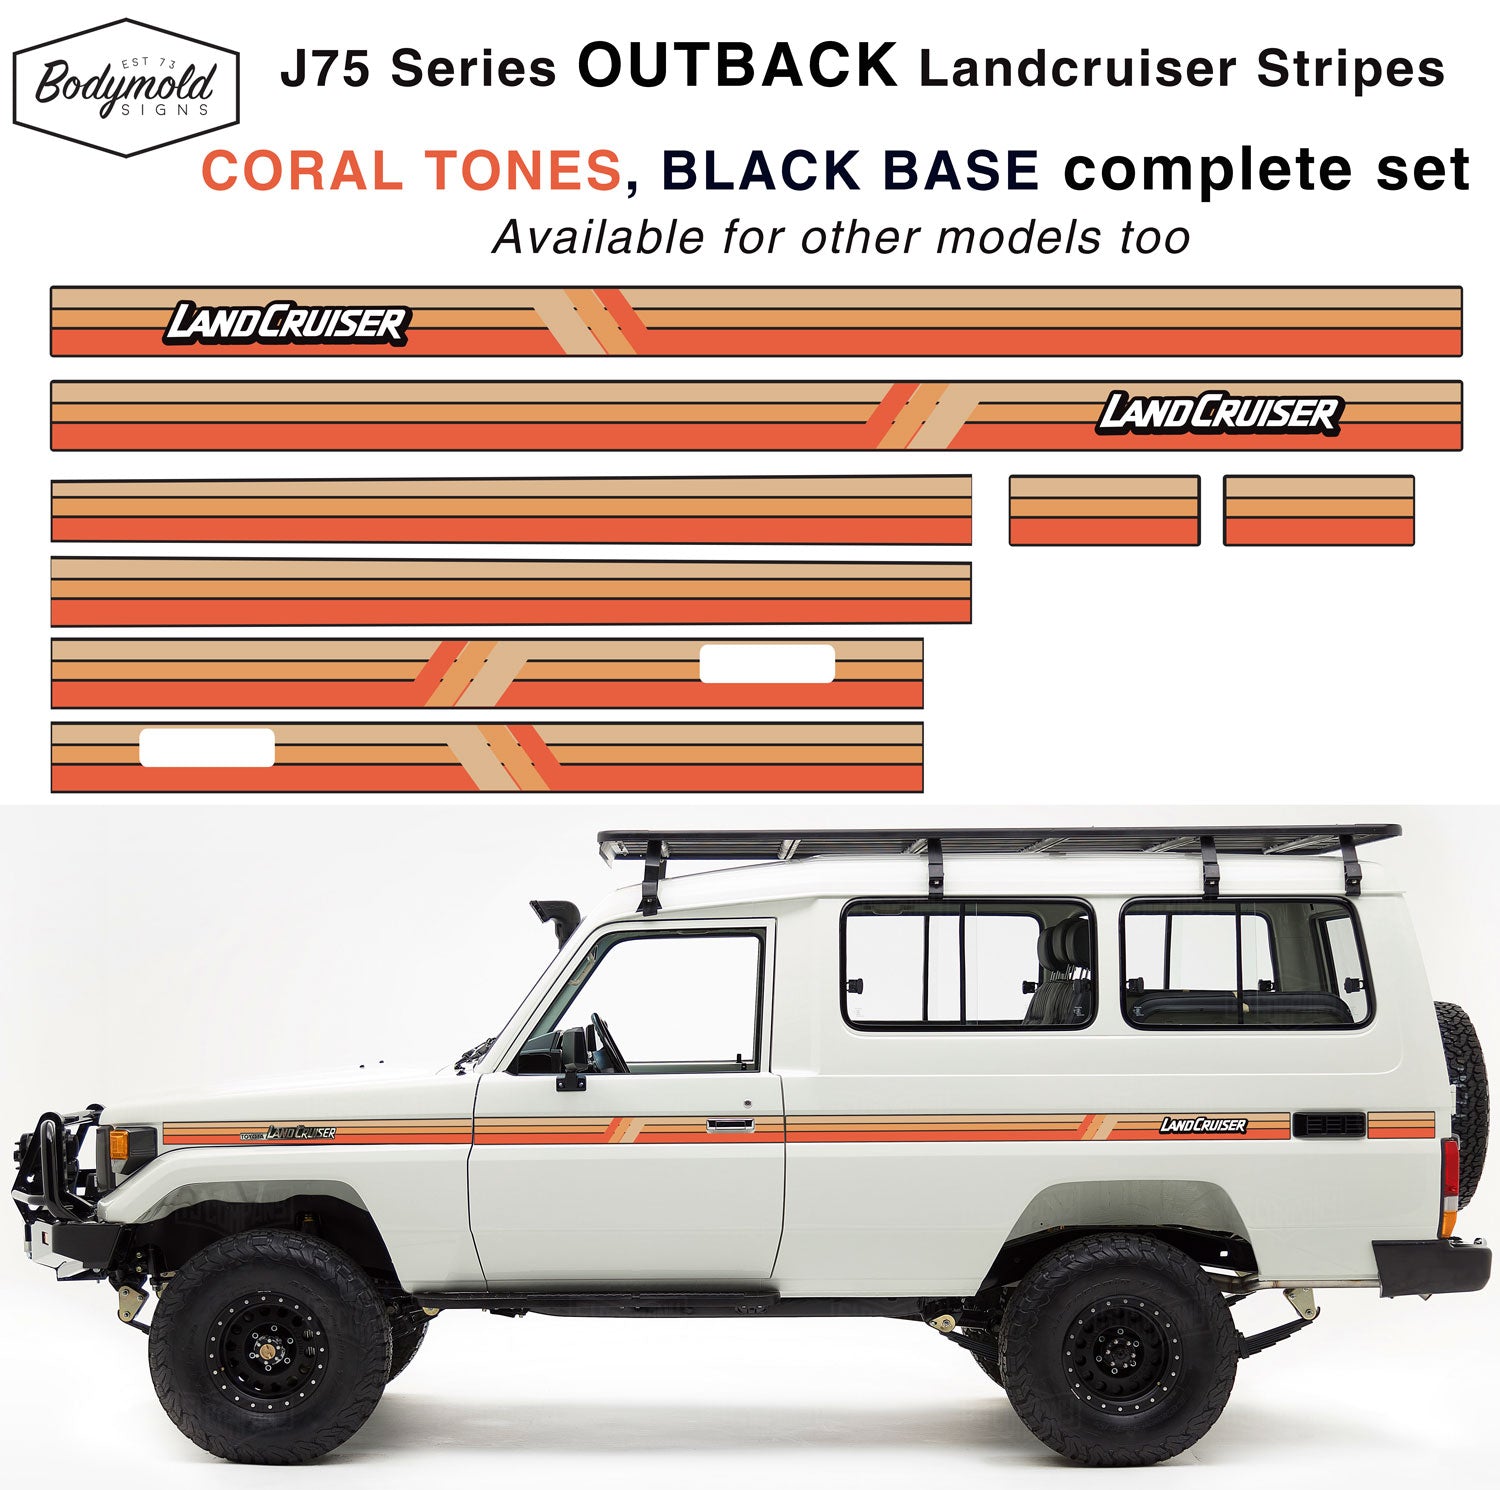 Landcruiser J75 Outback Stripes